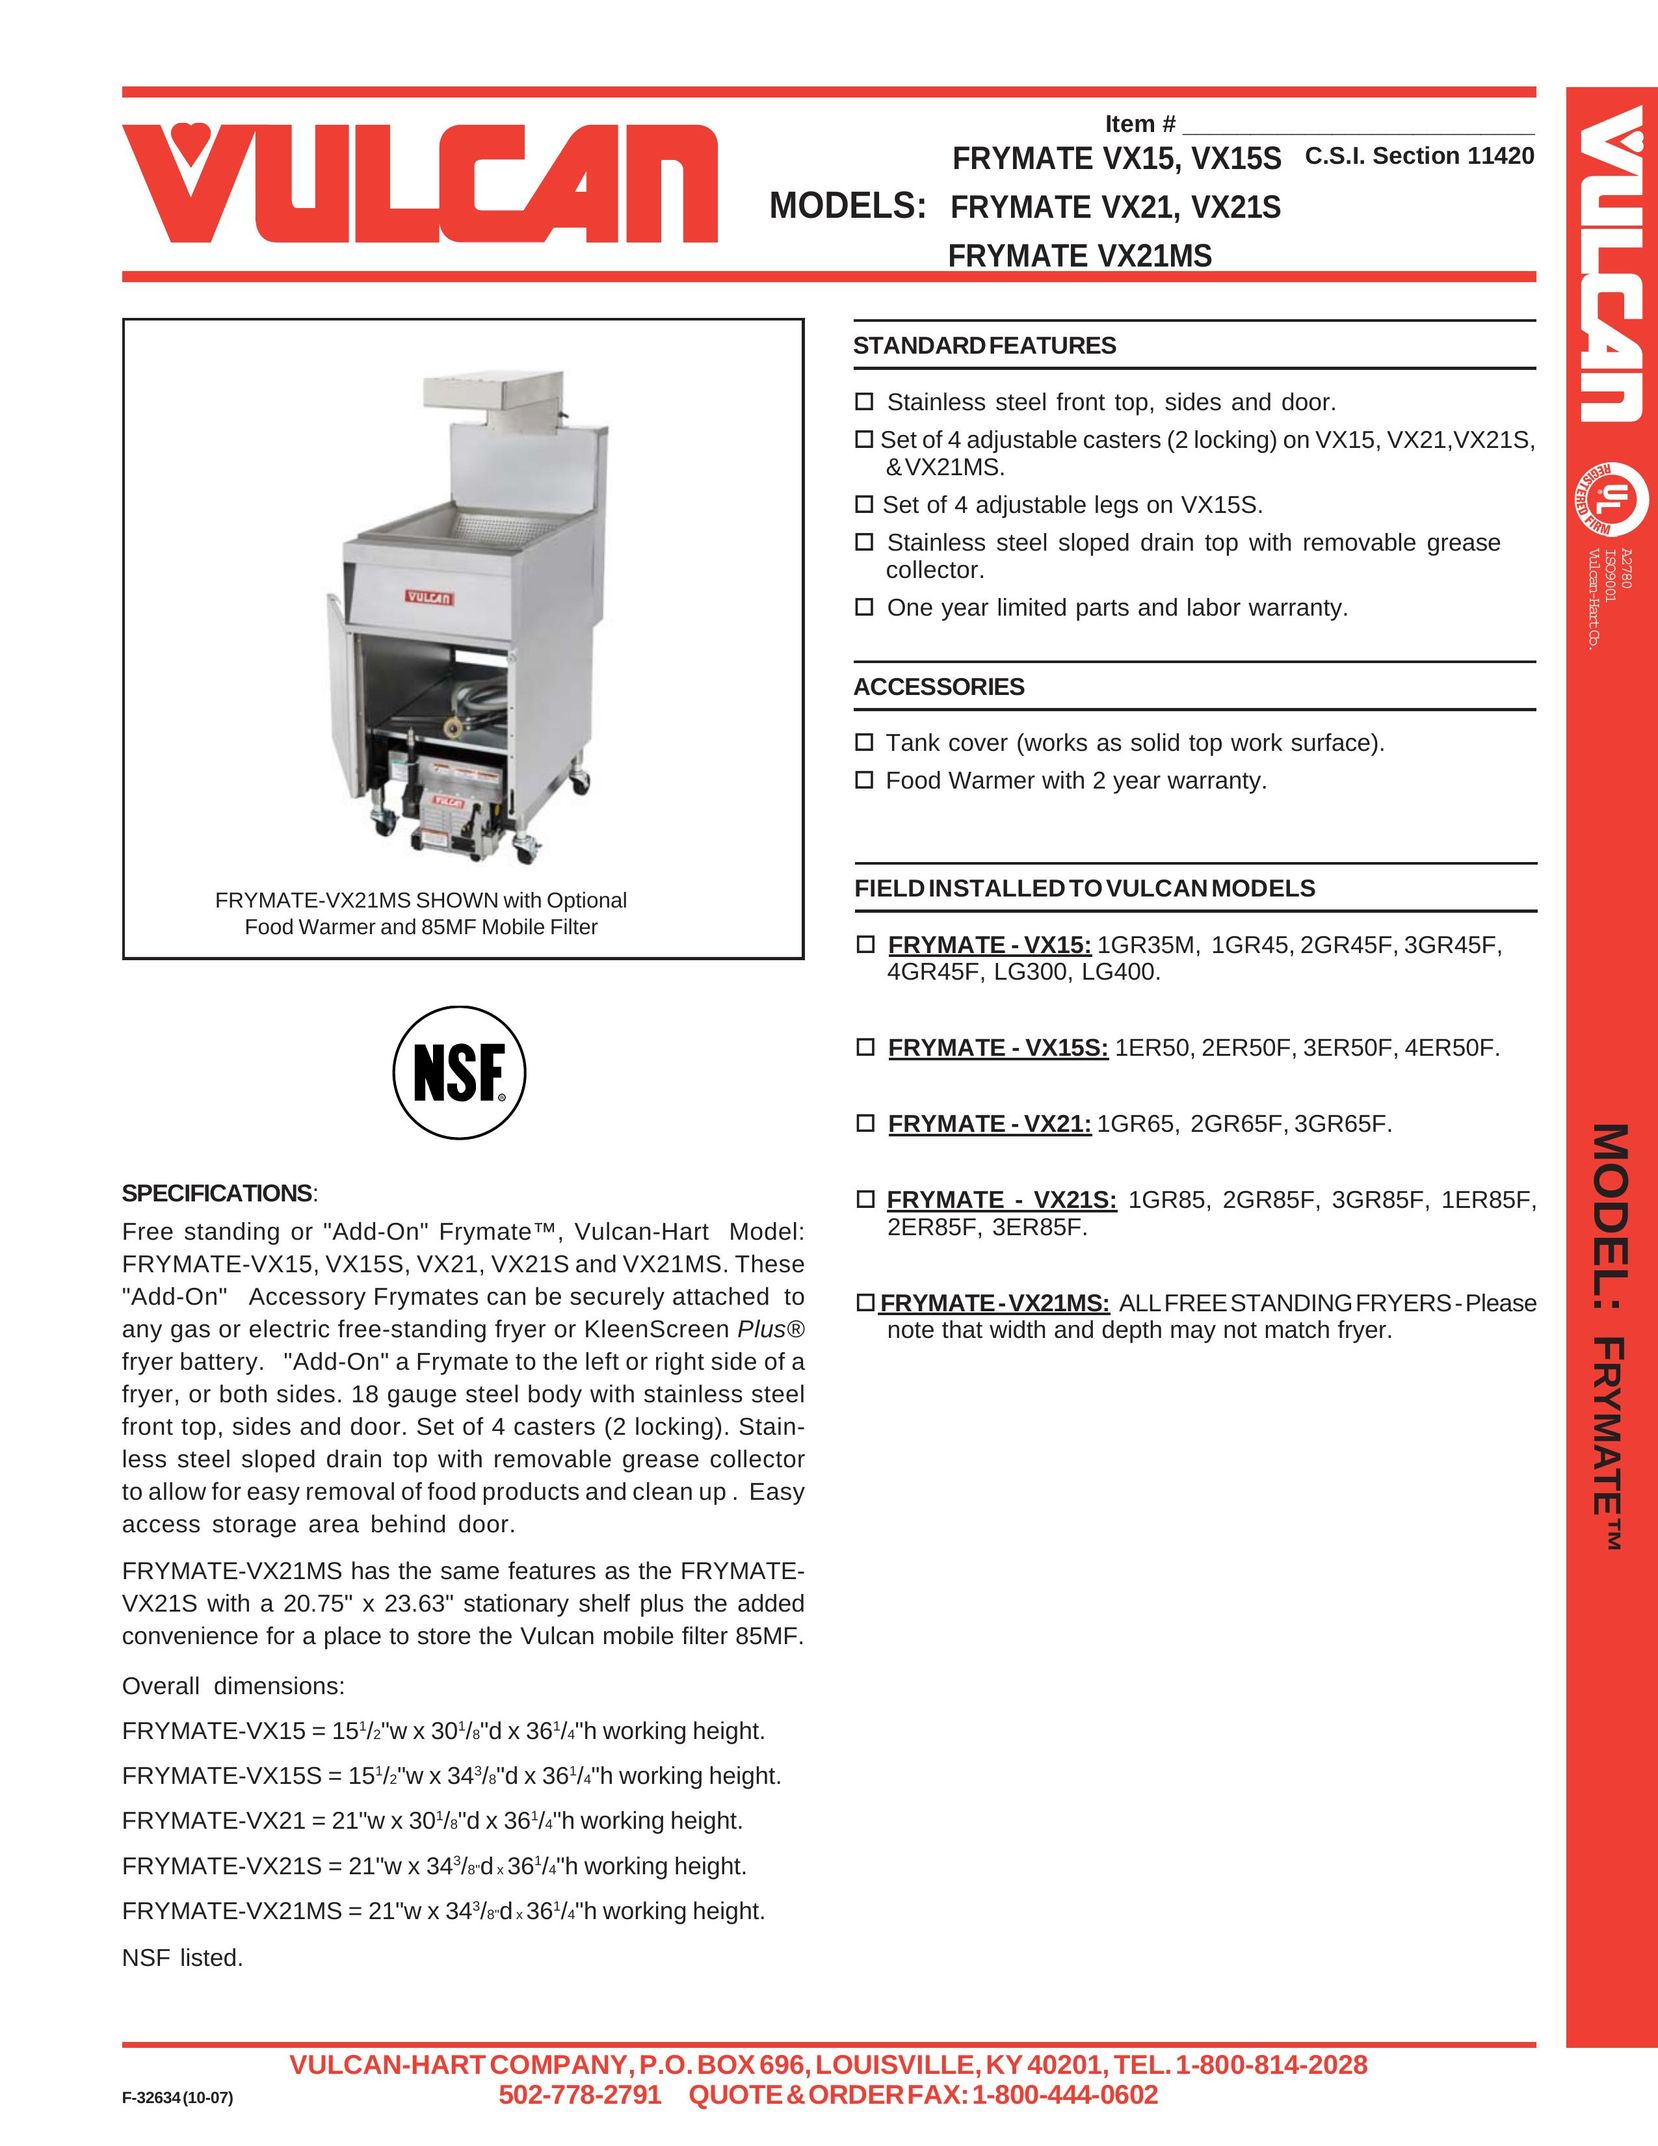 Vulcan-Hart FRYMATE VX21 Food Warmer User Manual